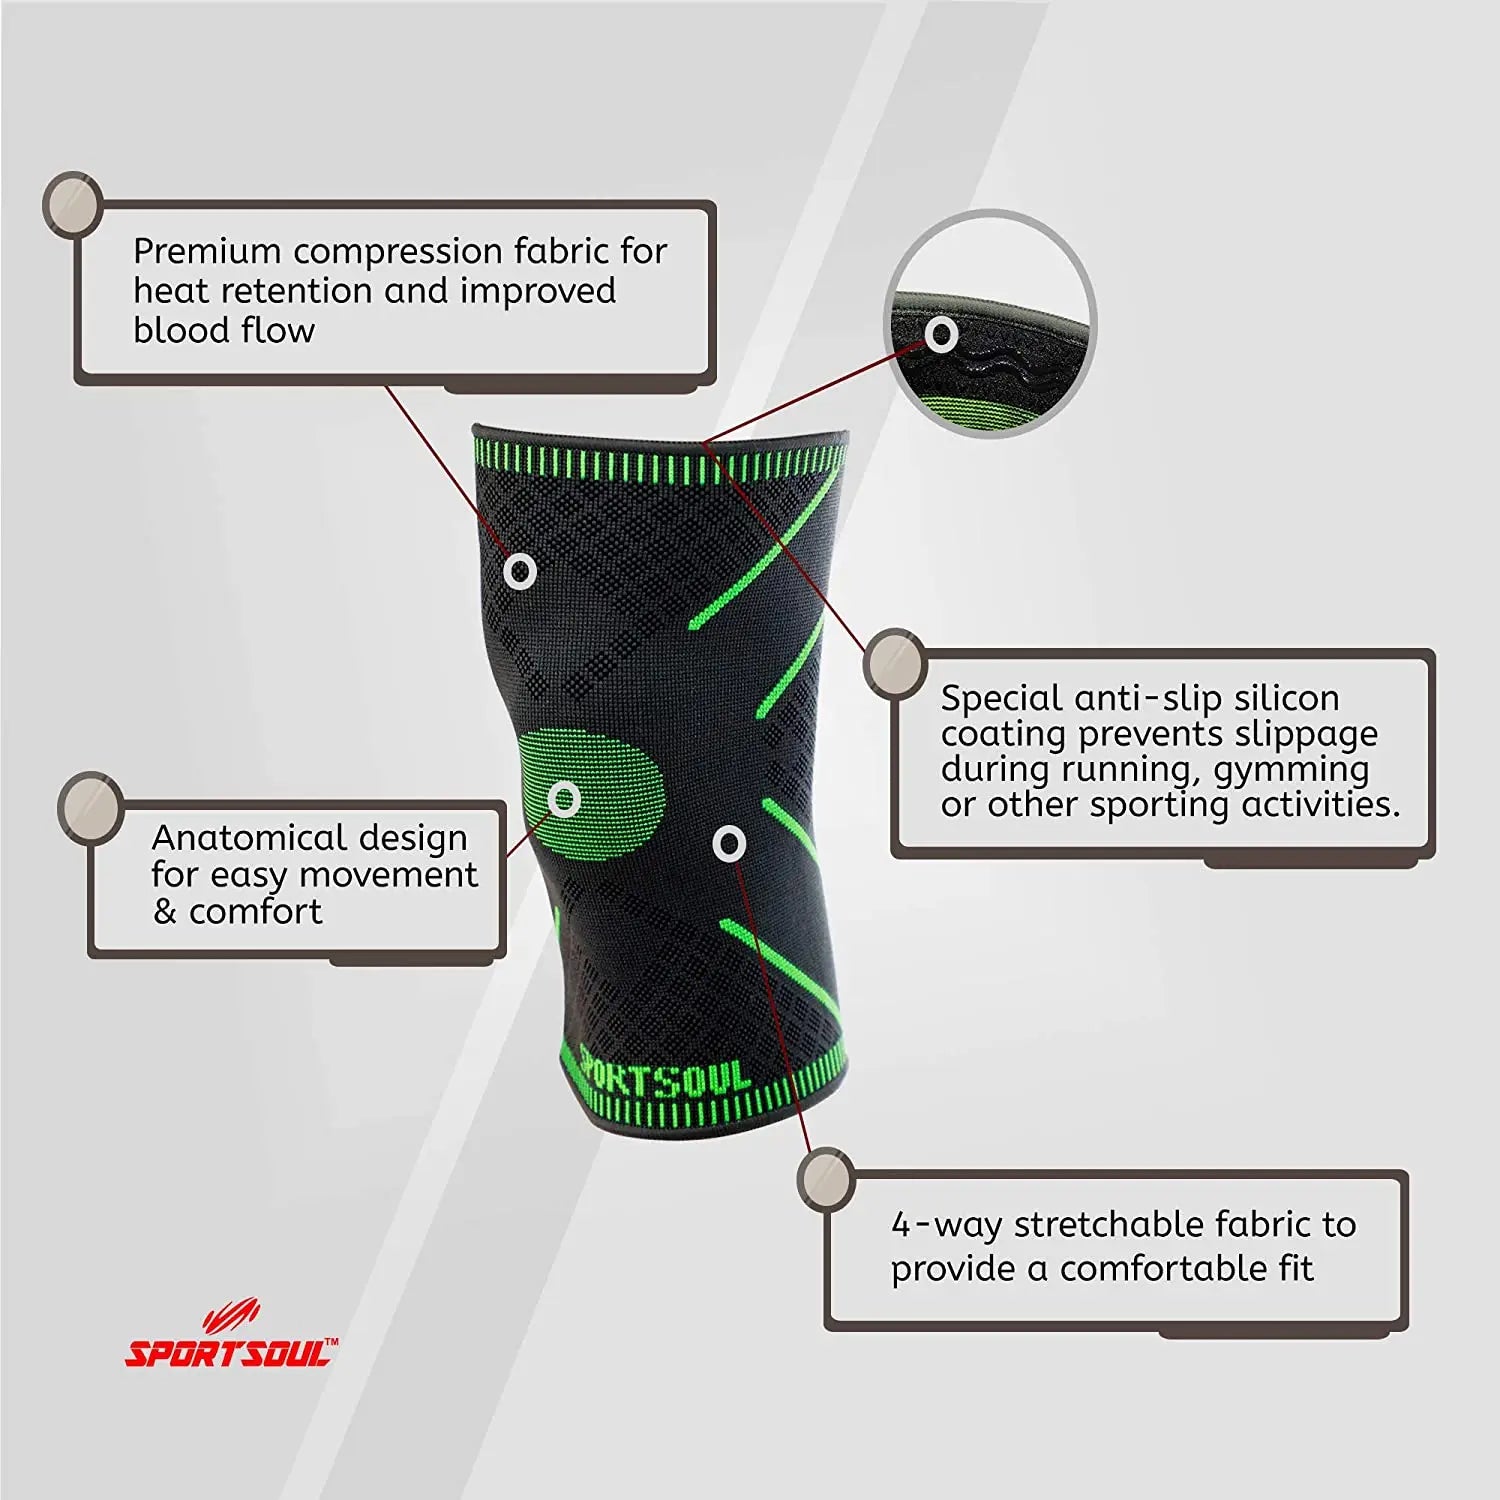 SportSoul Anti Slip 3D Compression Knee Support playmonks